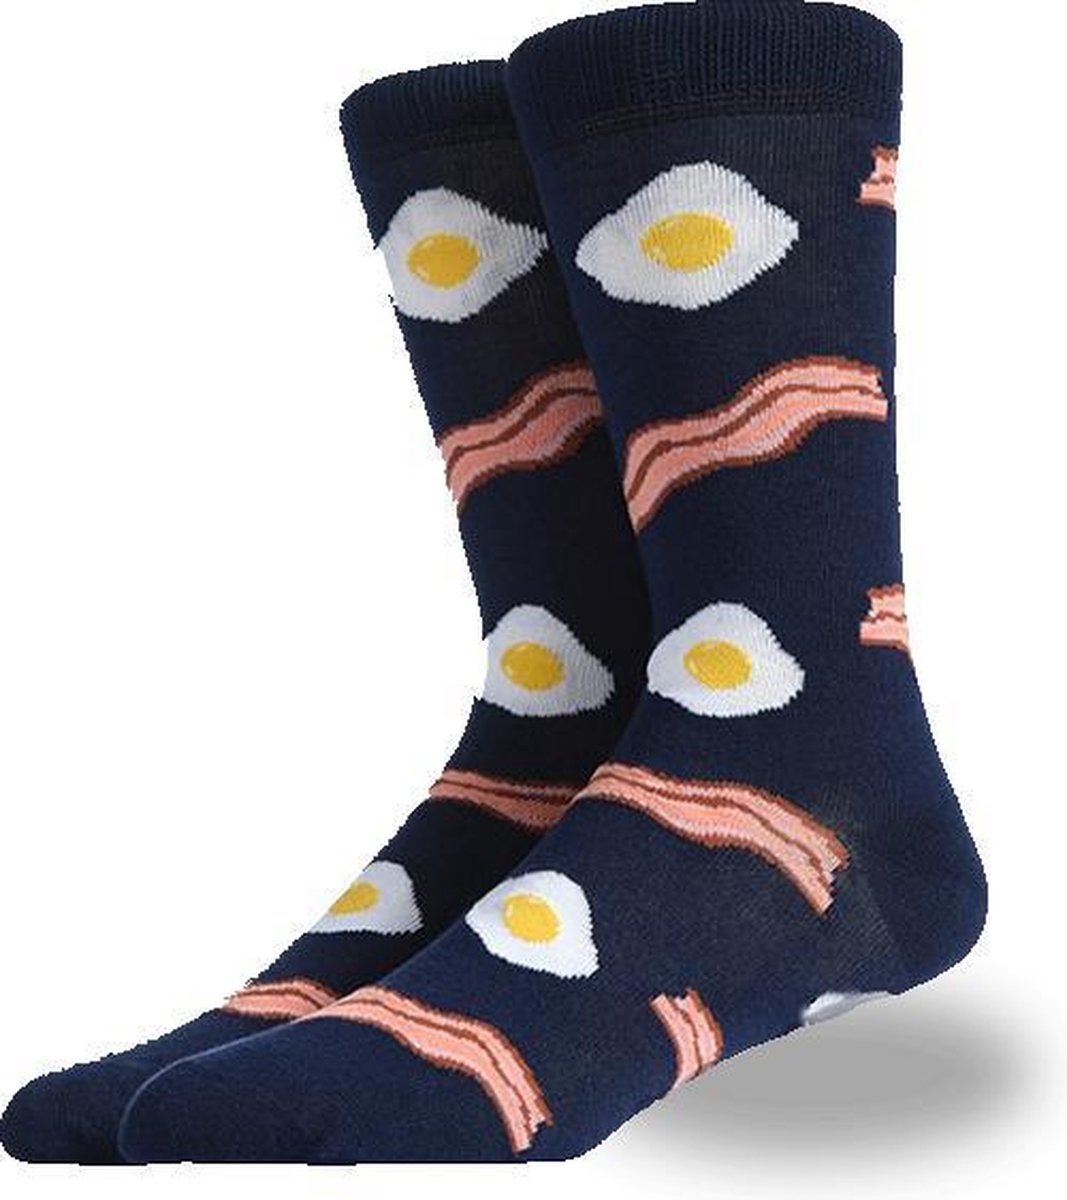 Ontbijt sokken - Unisex - One size fits all - Ontbijt cadeau - Cadeau voor mannen en vrouwen